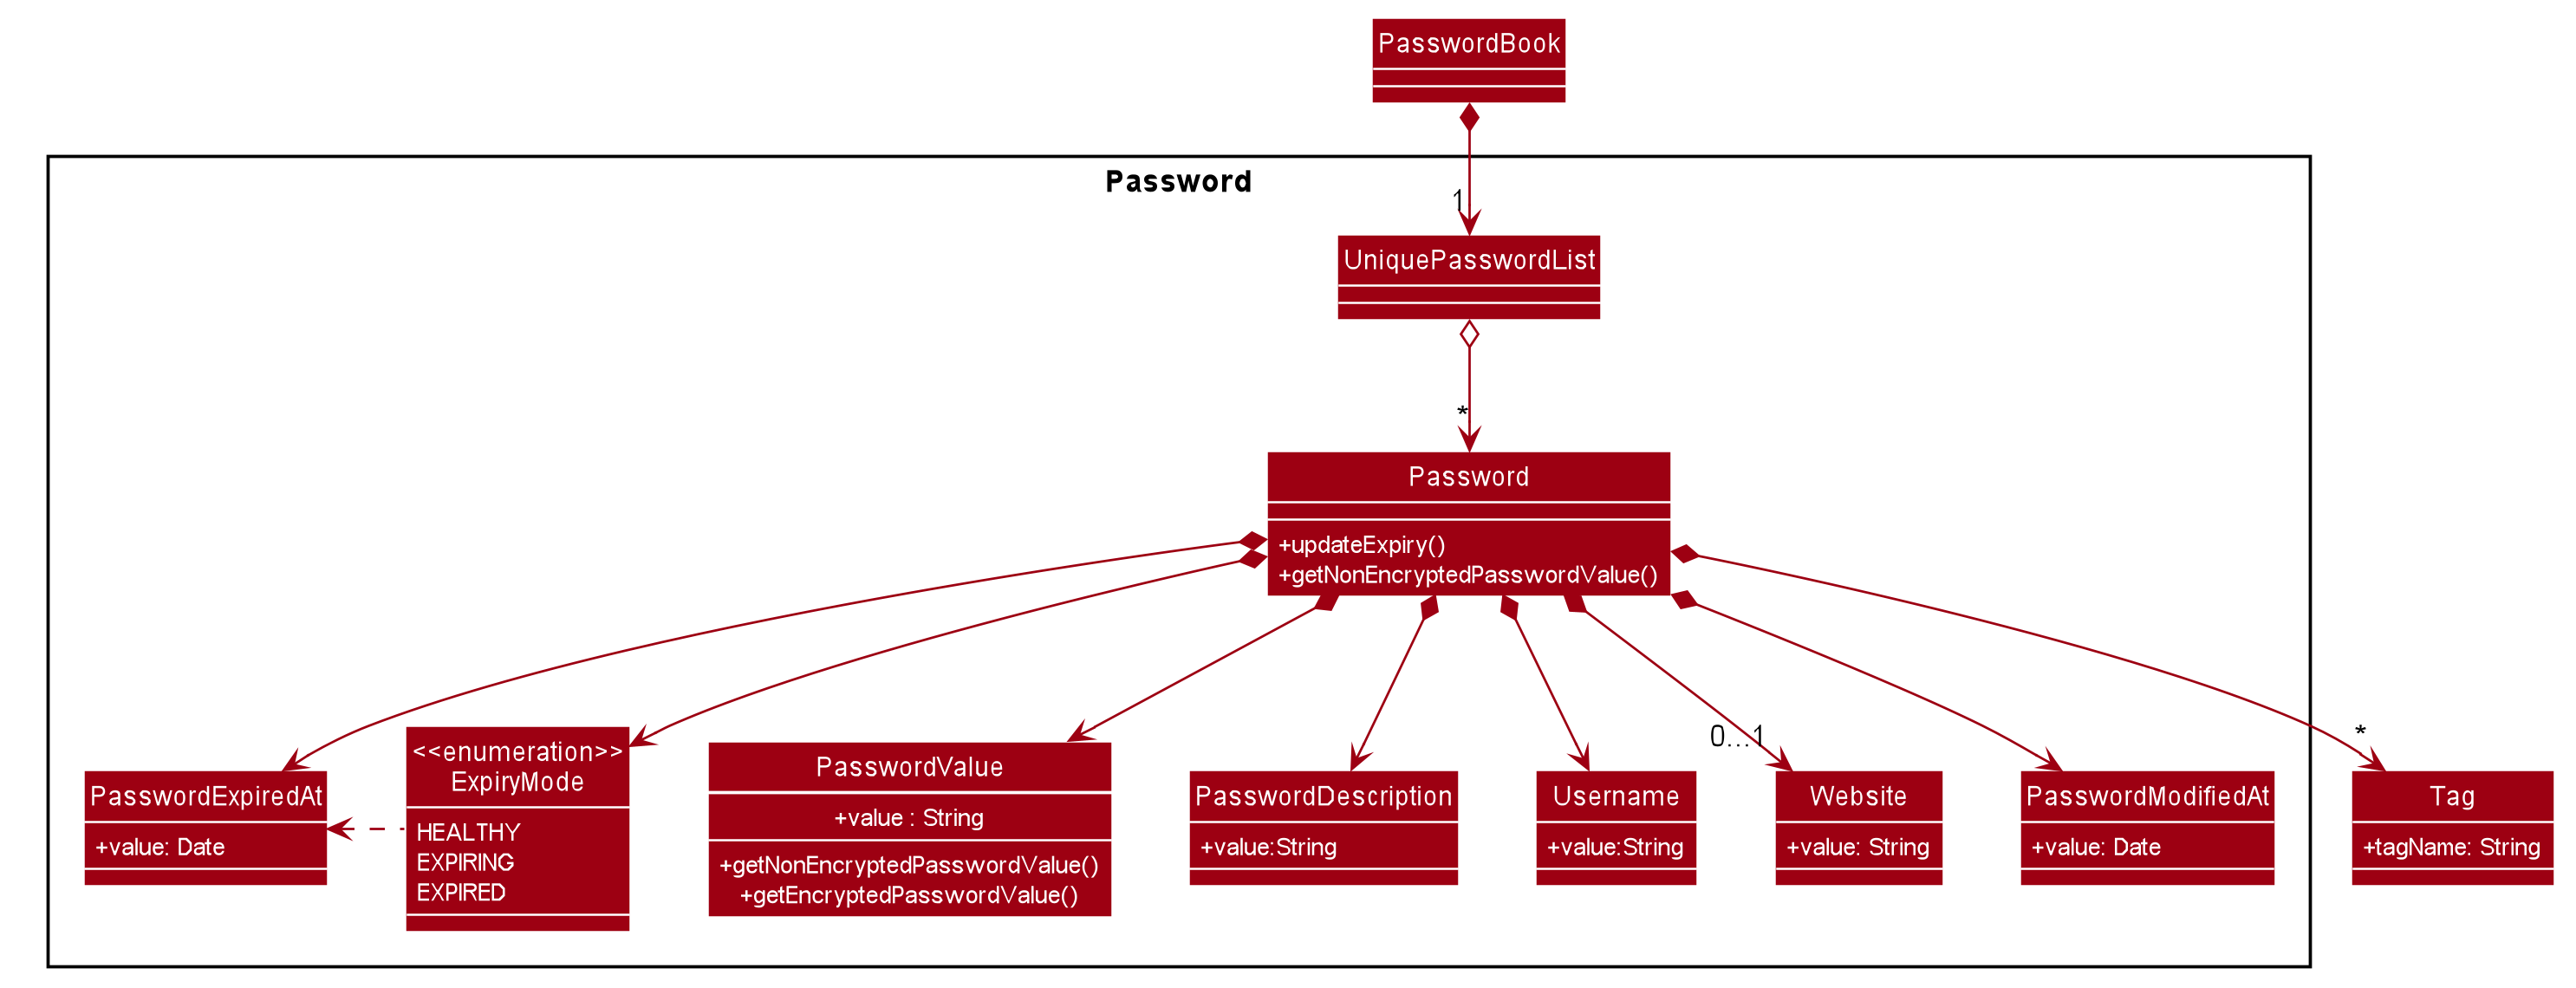 PasswordClassDiagram